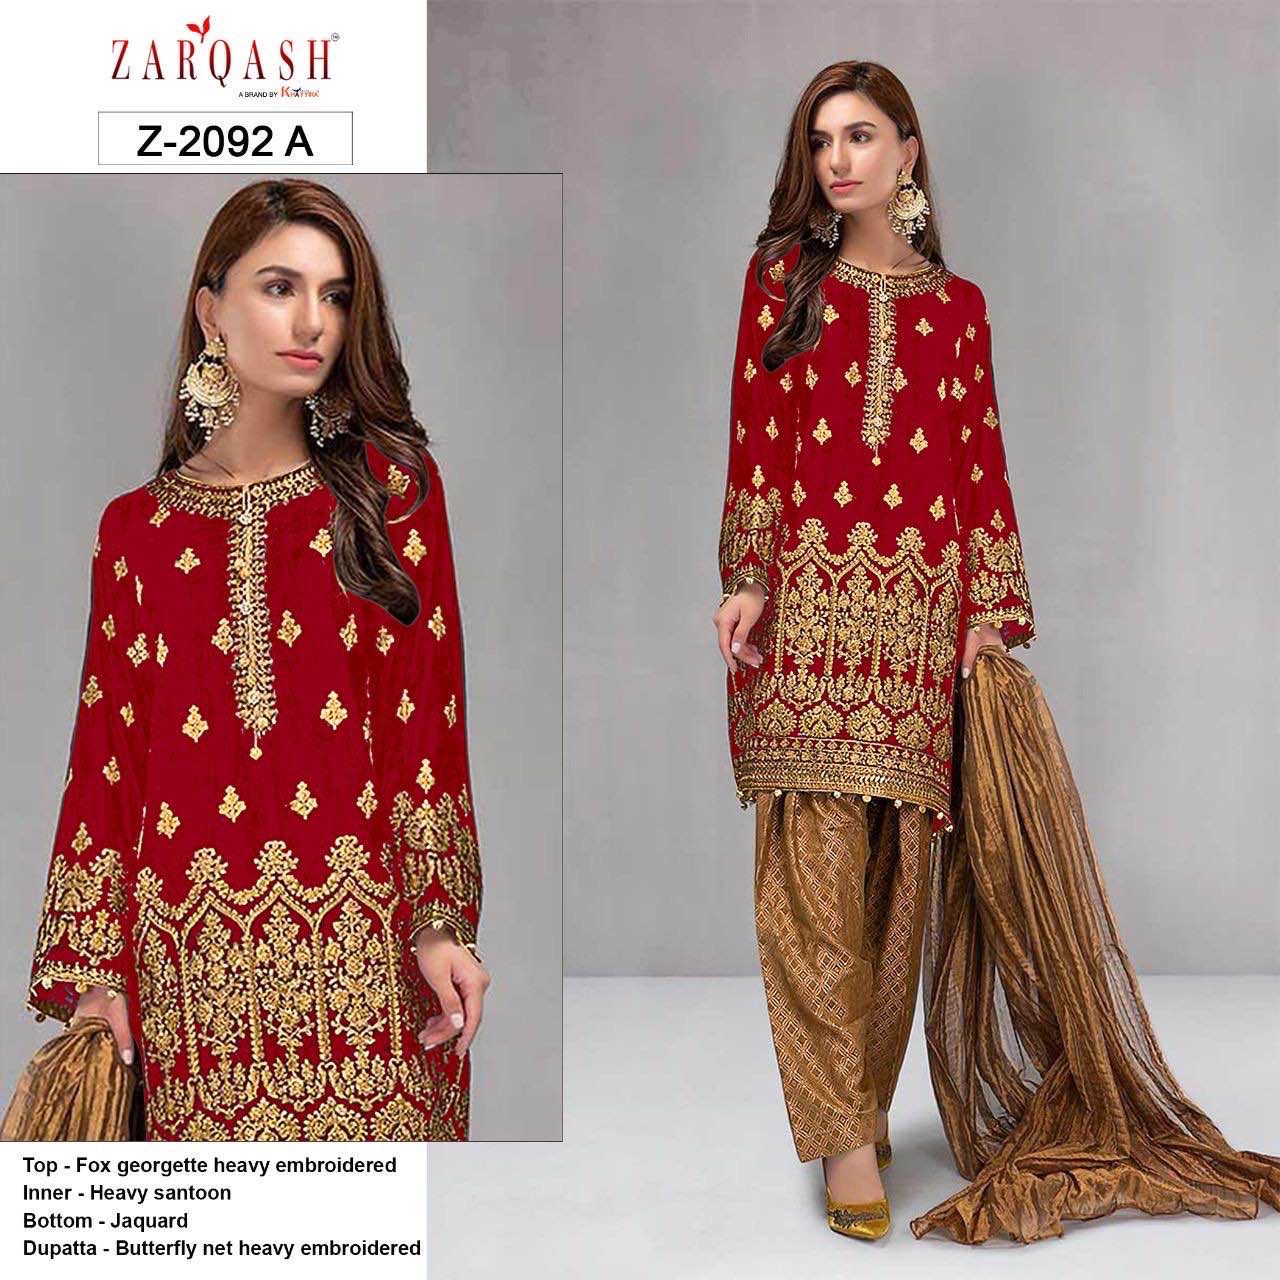 Z 2092 Ad Zarqash Pakistani Salwar Suits Manufacturer Wholesaler